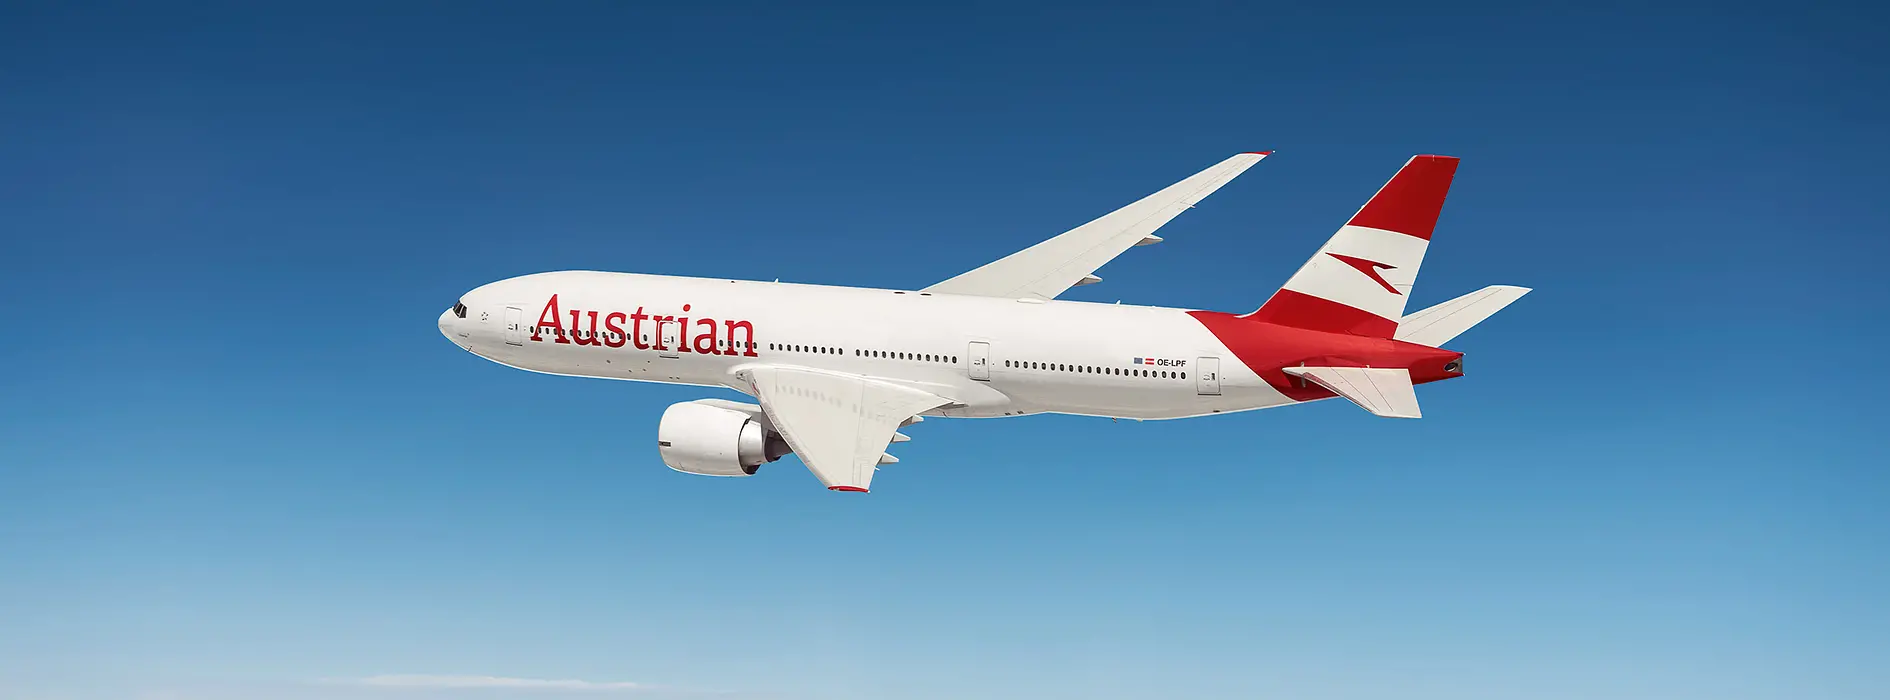 Austrian Airlines Airplane